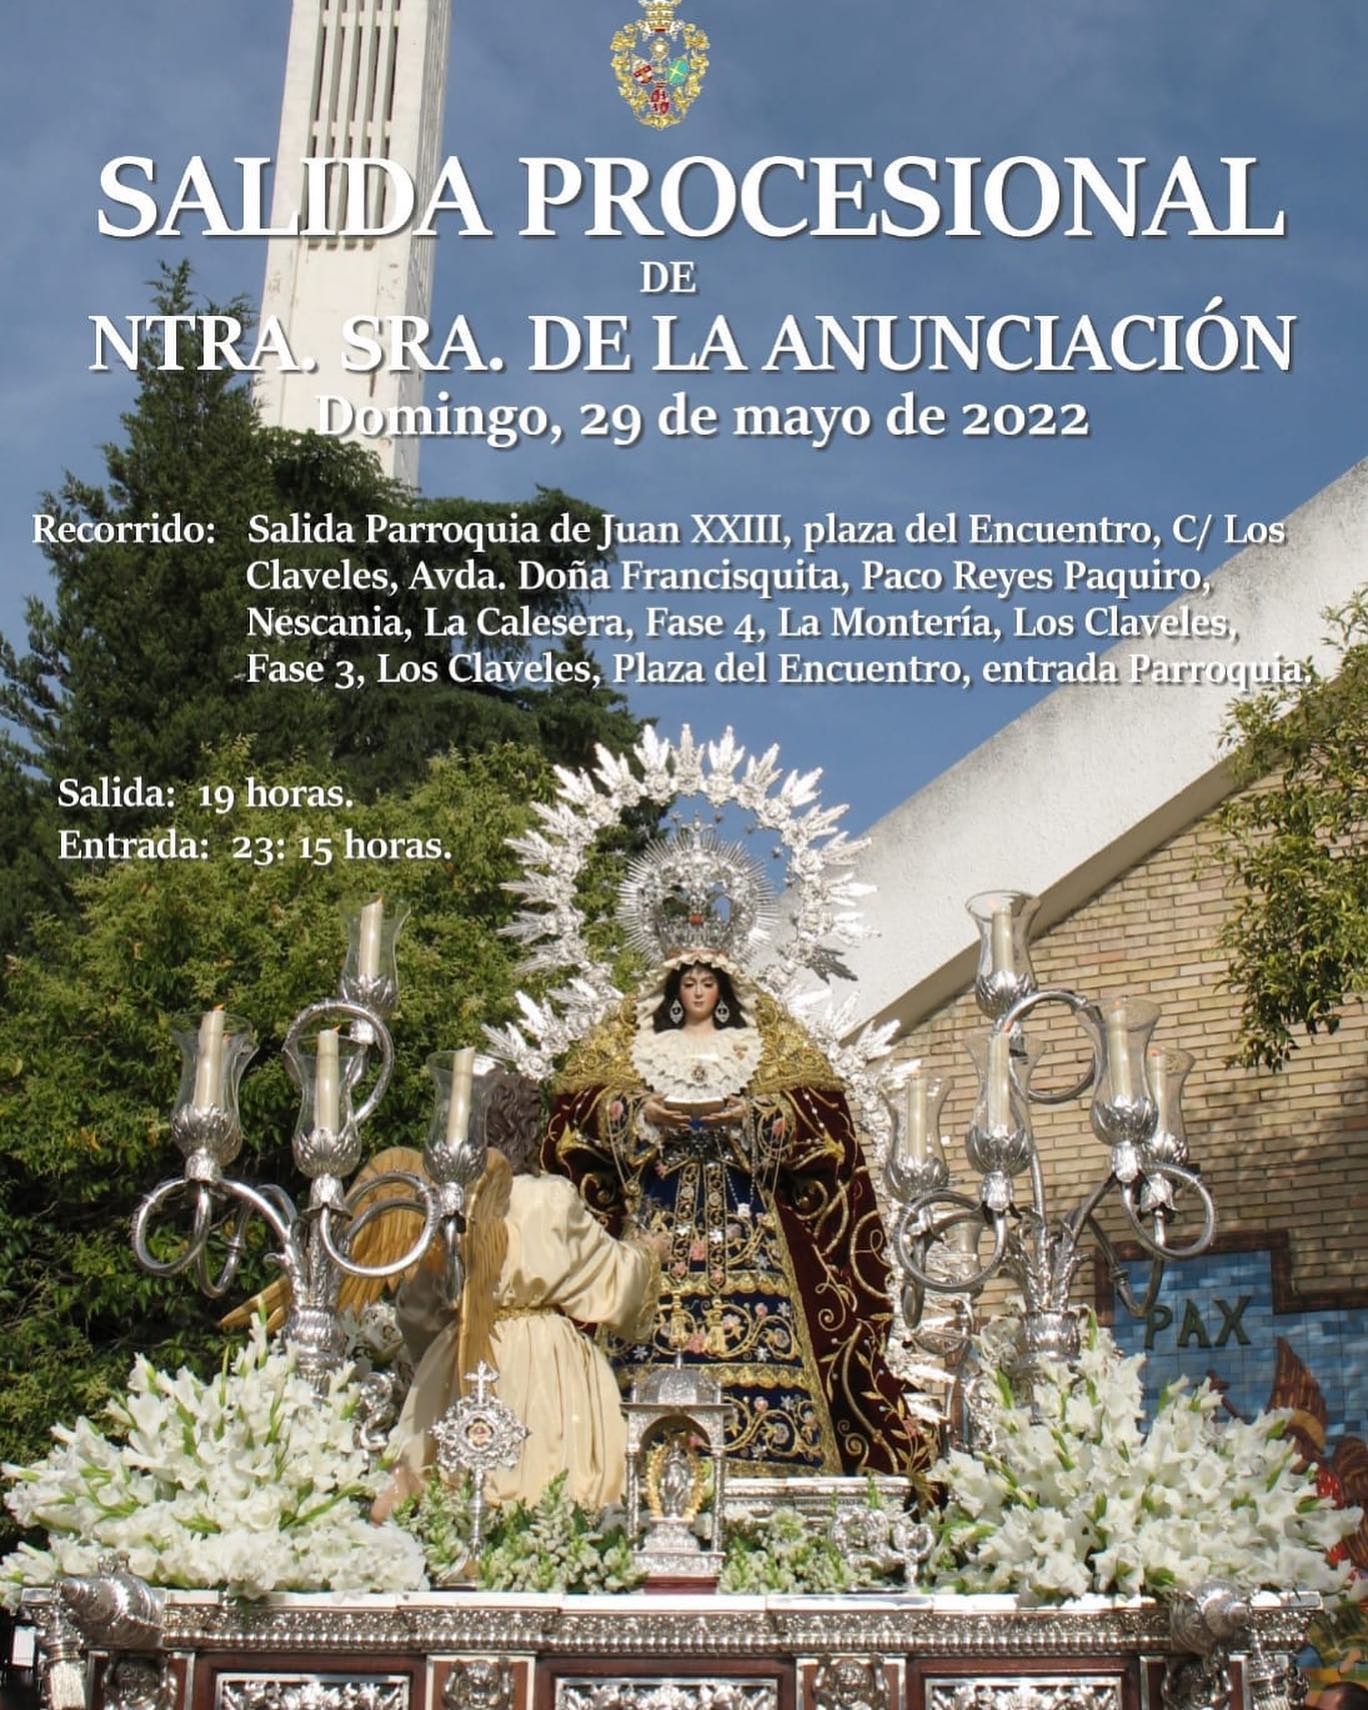 29 D MAYO / SALIDA PROCESIONAL

#GloriasDeSevilla #JuanXXIII #Anunciacion #Sevilla